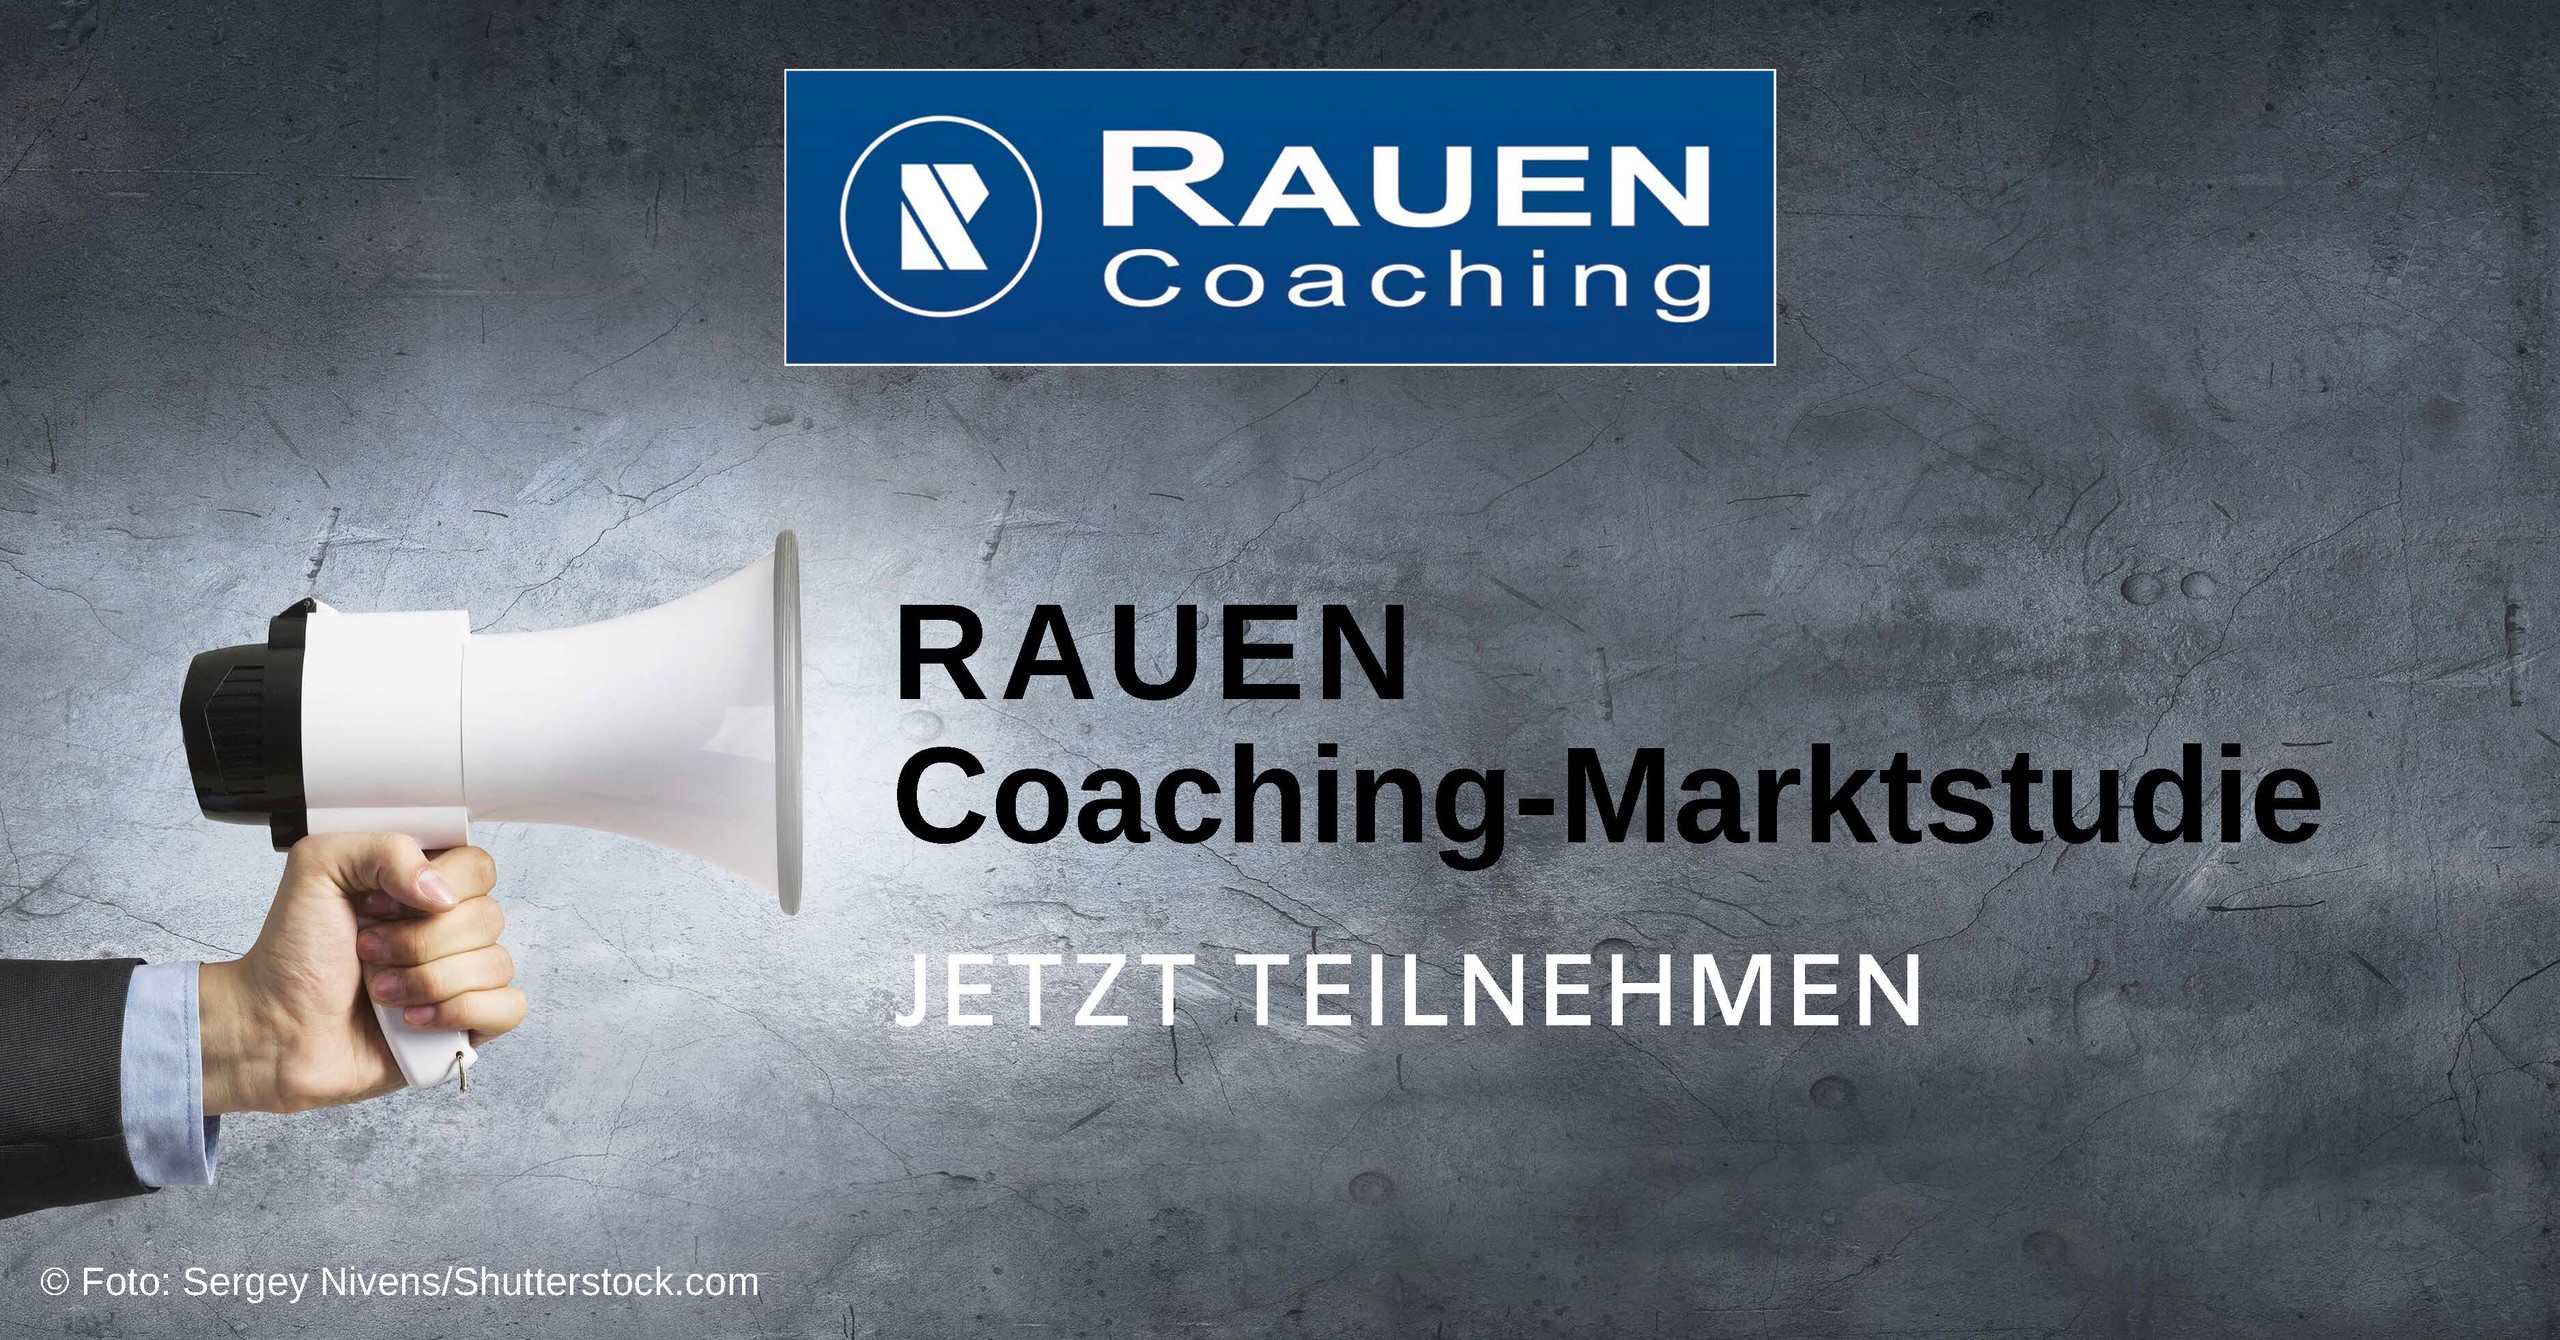 RAUEN Coaching-Marktstudie 2019